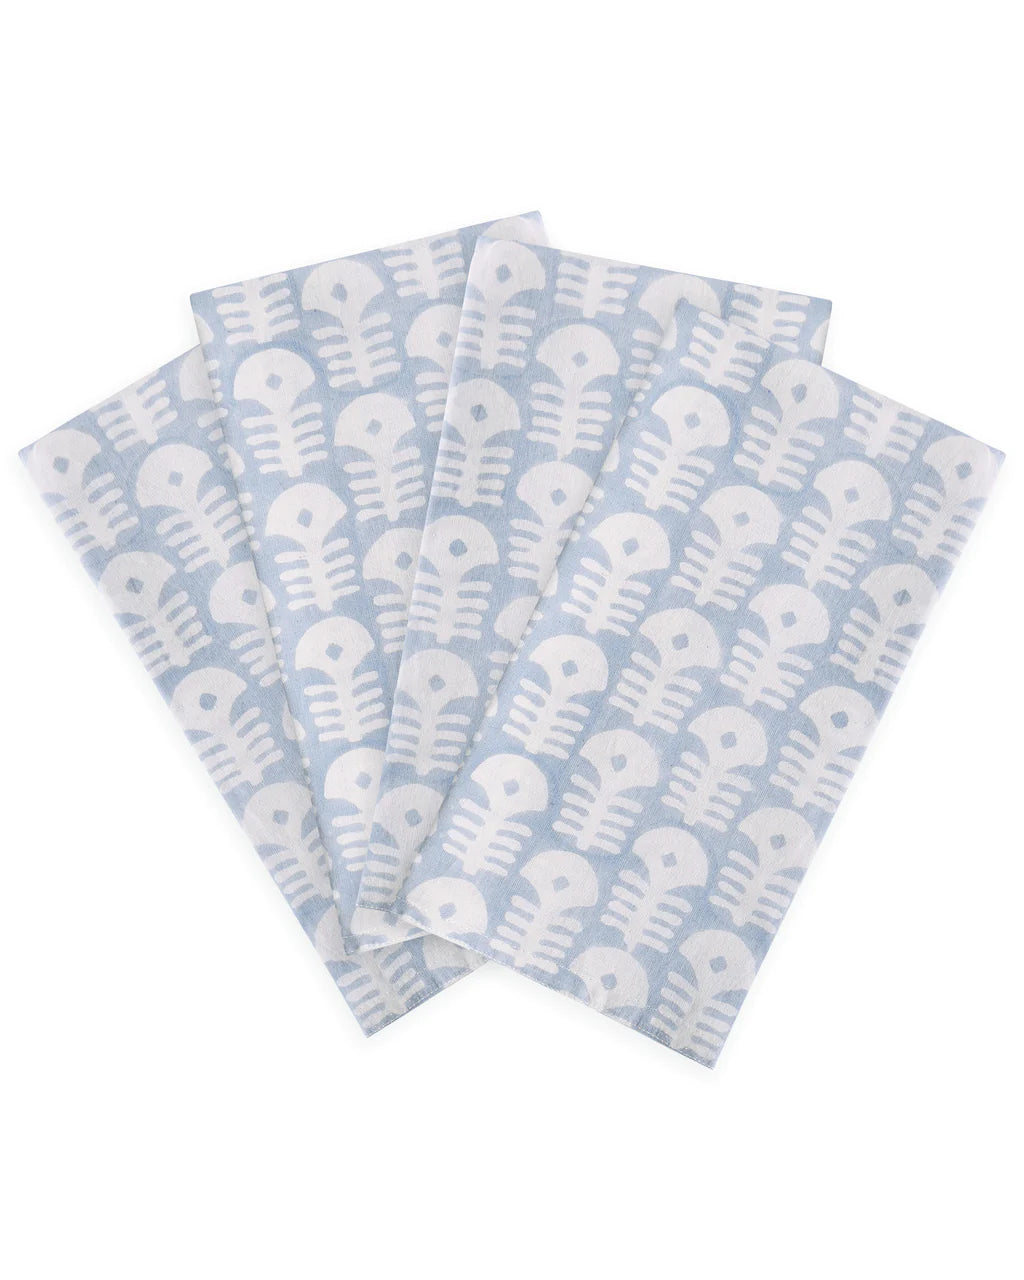 WALTER . G - Raj Azure cotton napkins (set of 4)